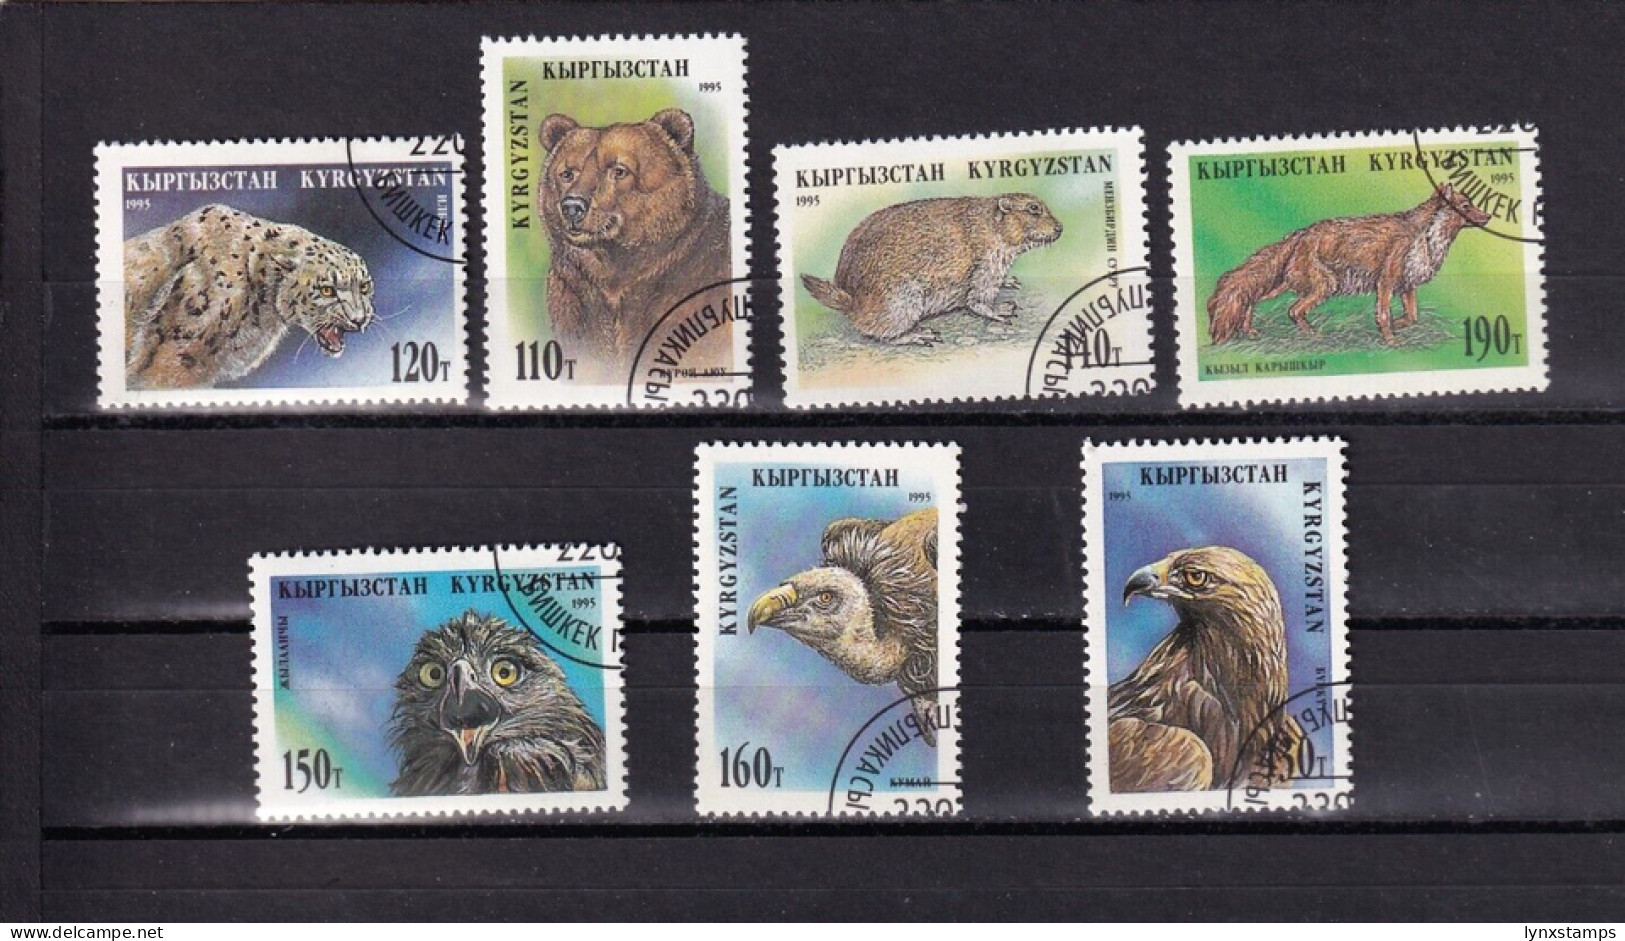 LI02 Kyrgyzstan 1995 Fauna Of Kyrgyzstan Full Set Used Stamps - Kirgisistan